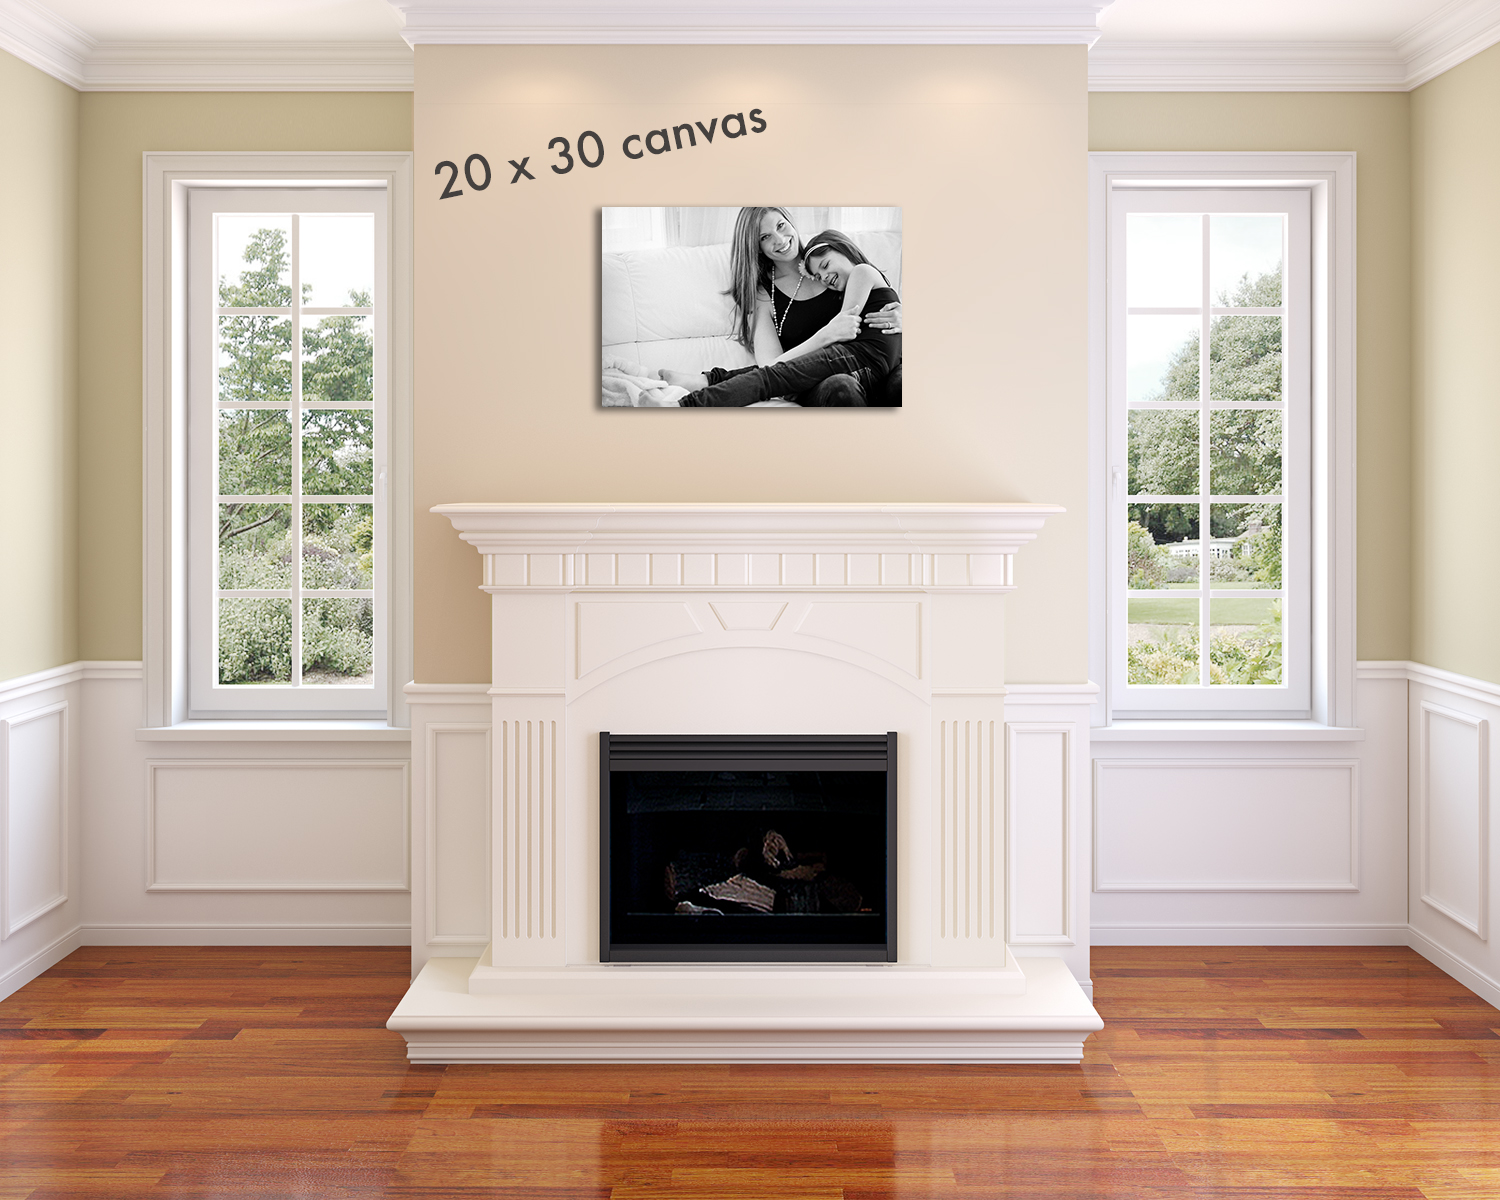 20 x 30 canvas fireplace.jpg